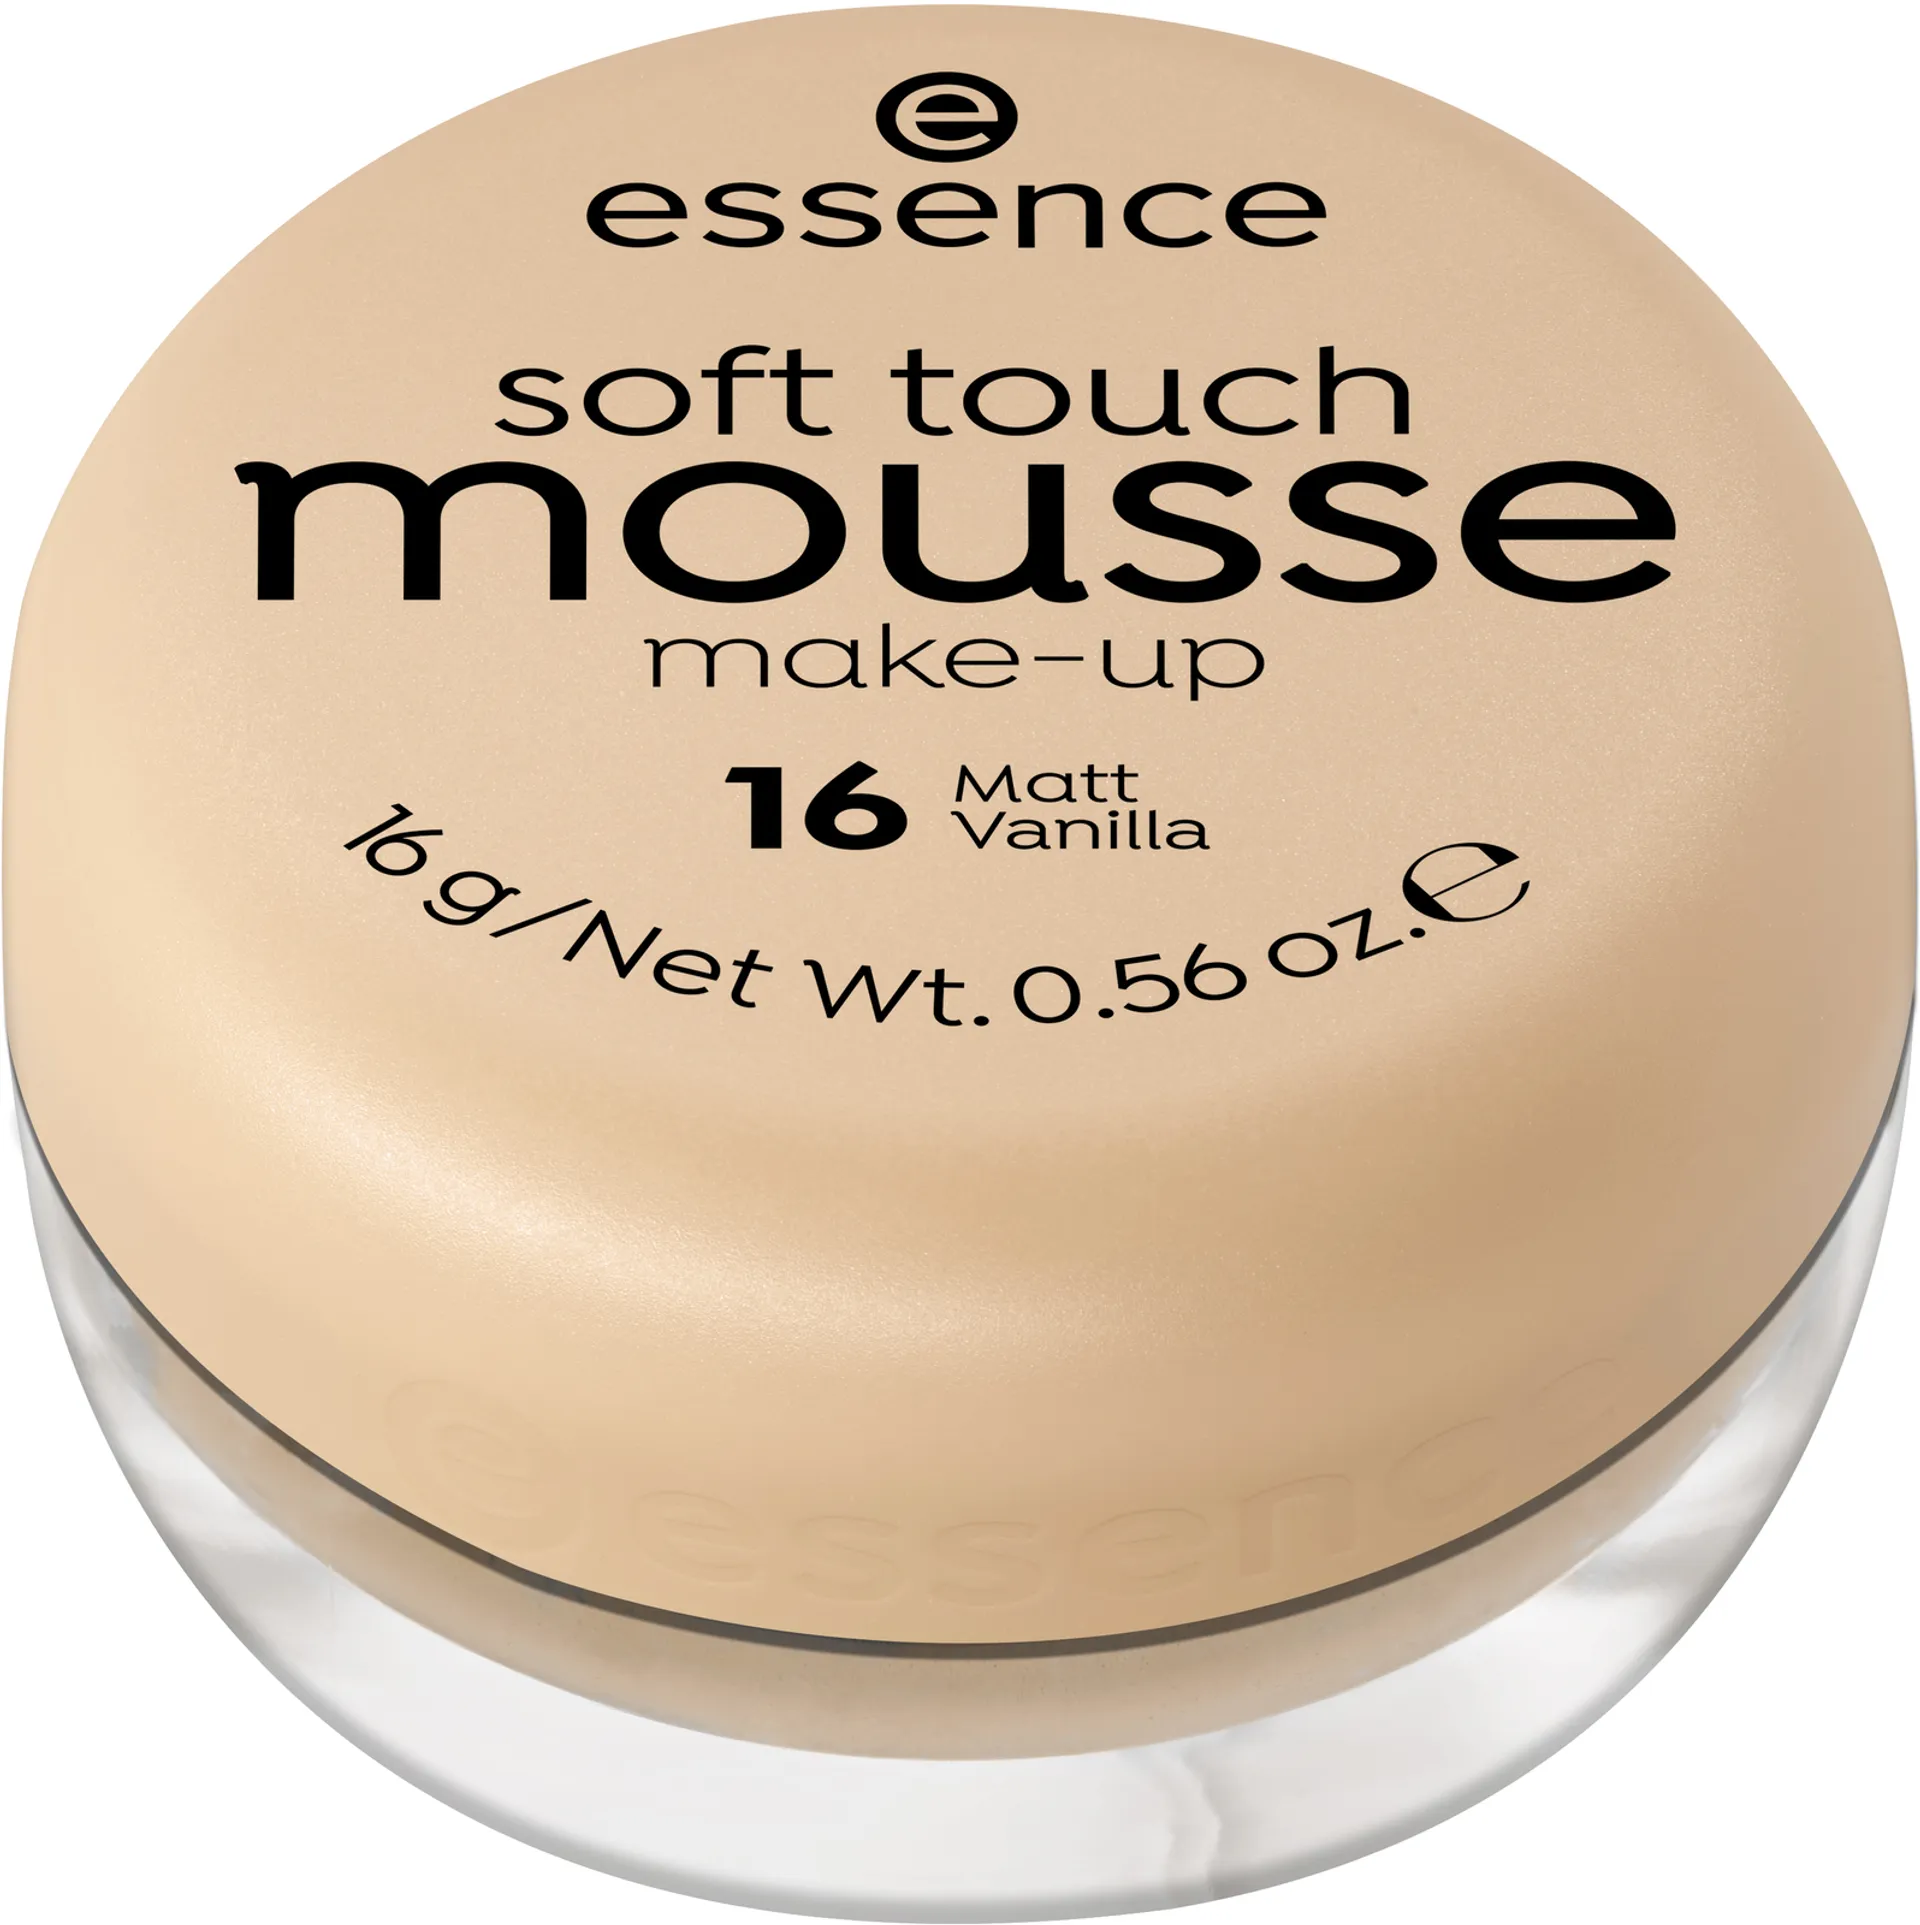 essence soft touch mousse meikkivoide 16g - matt vanilla - 1